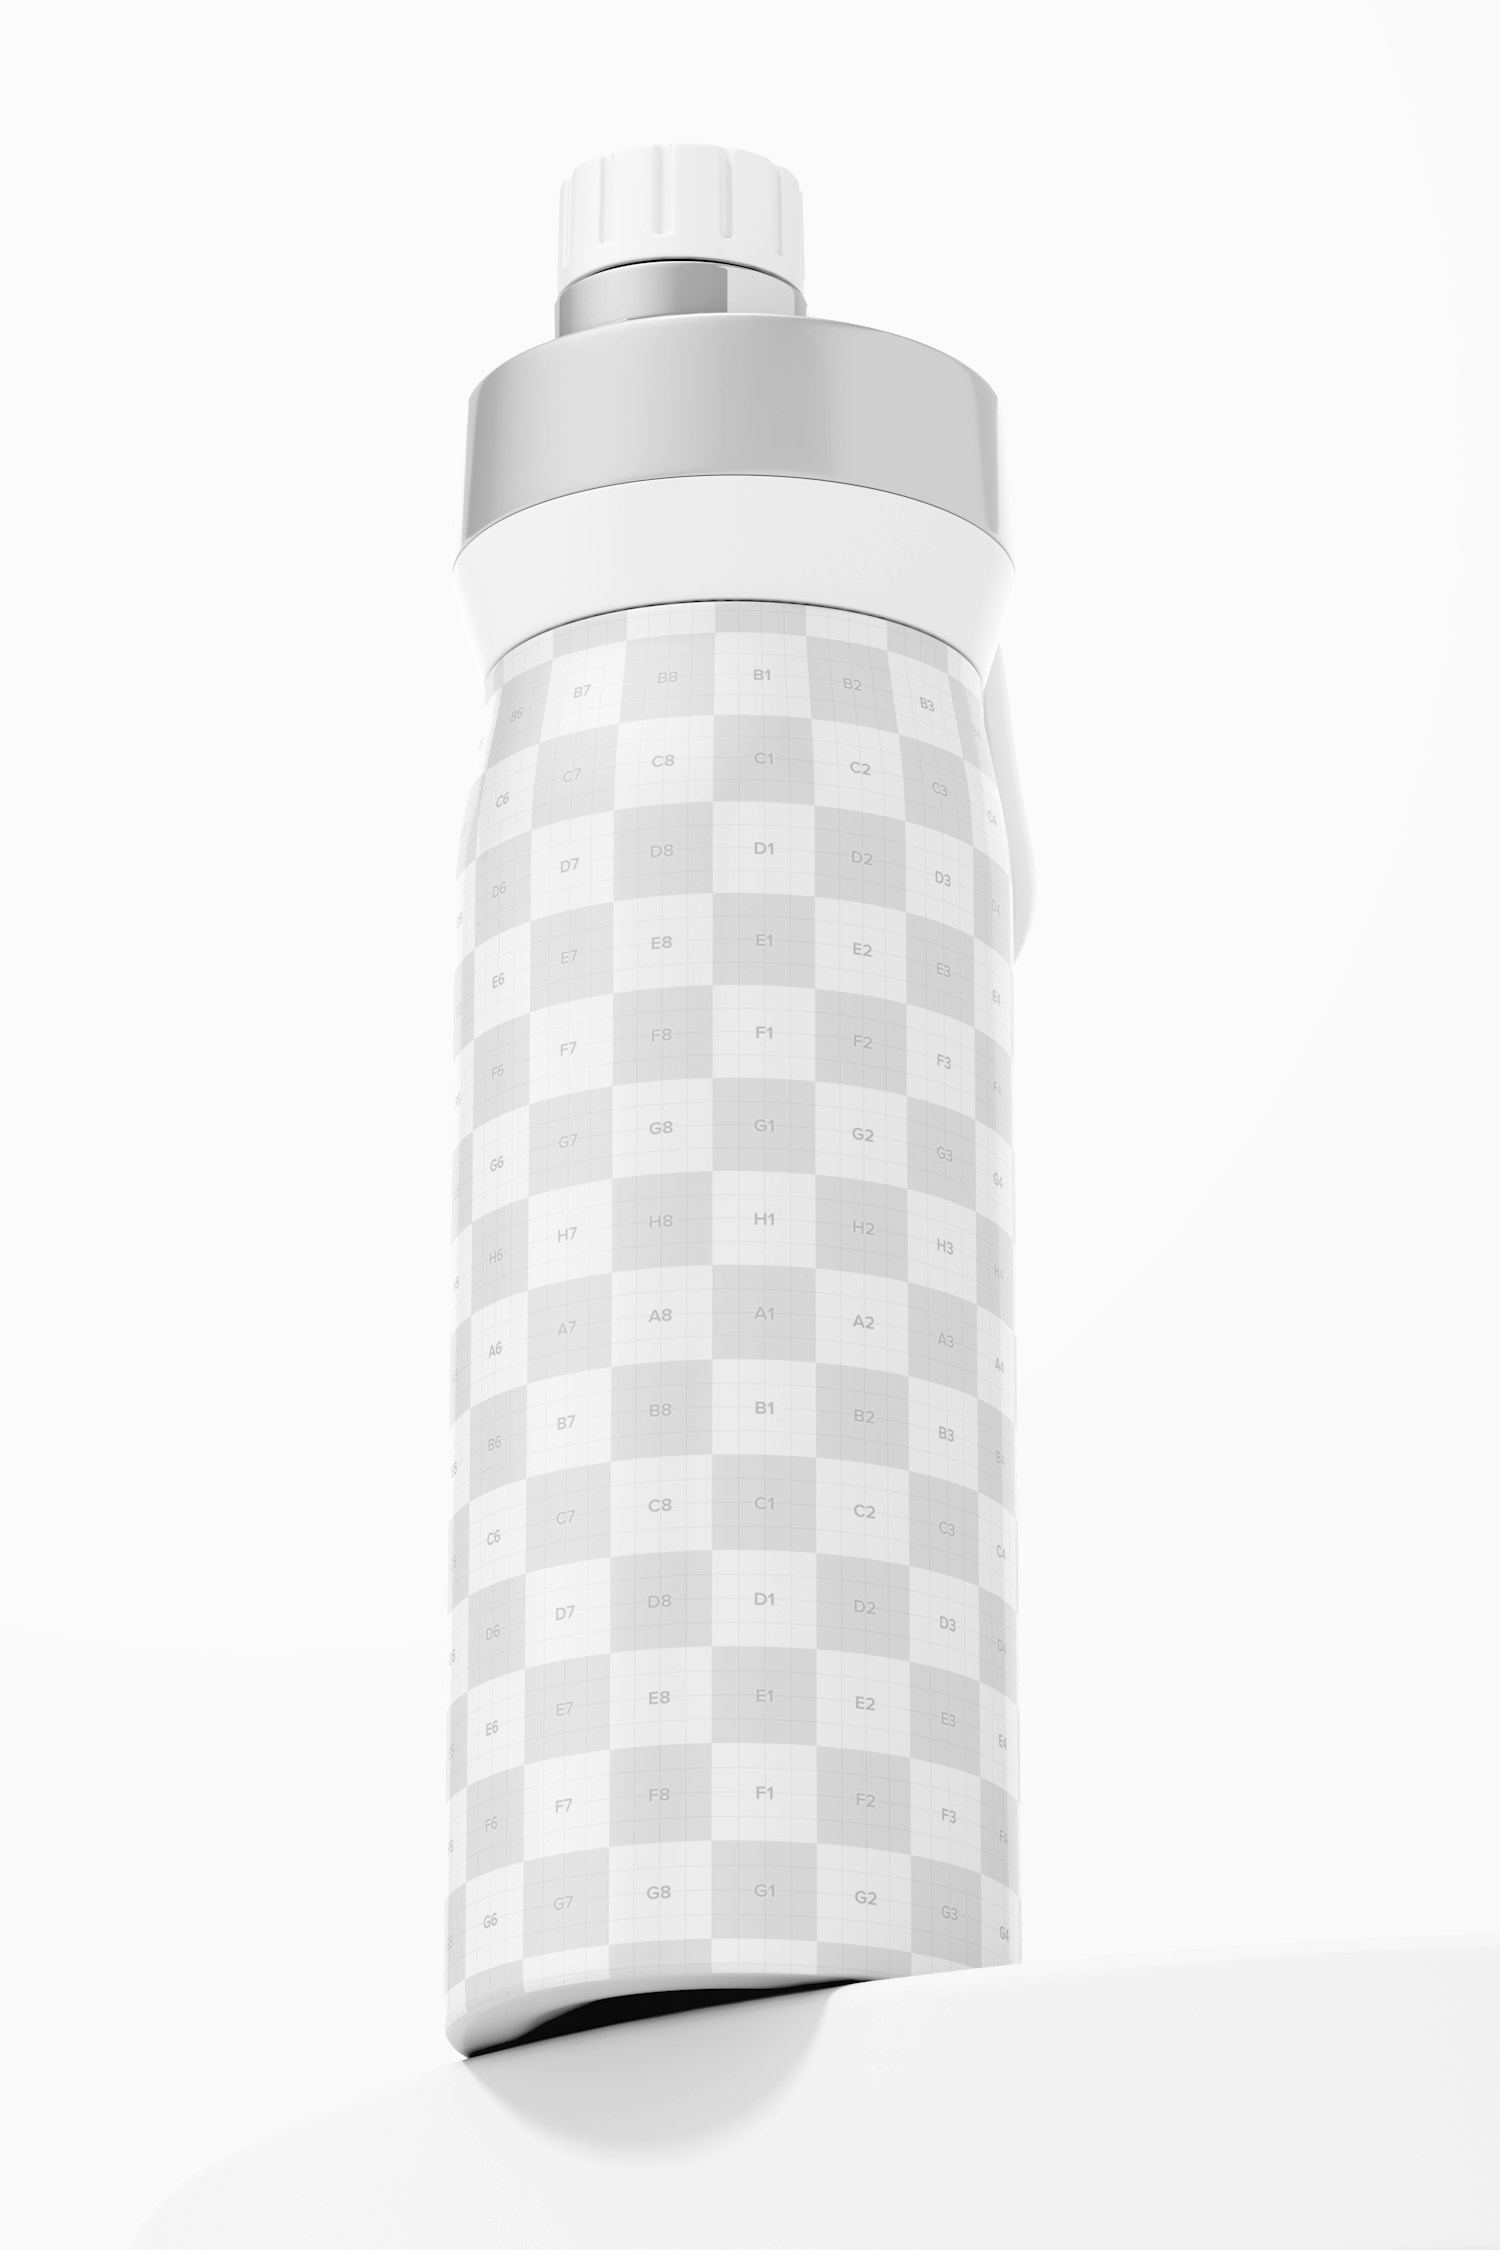 Large Water Bottle with Lid Mockup, on Podium